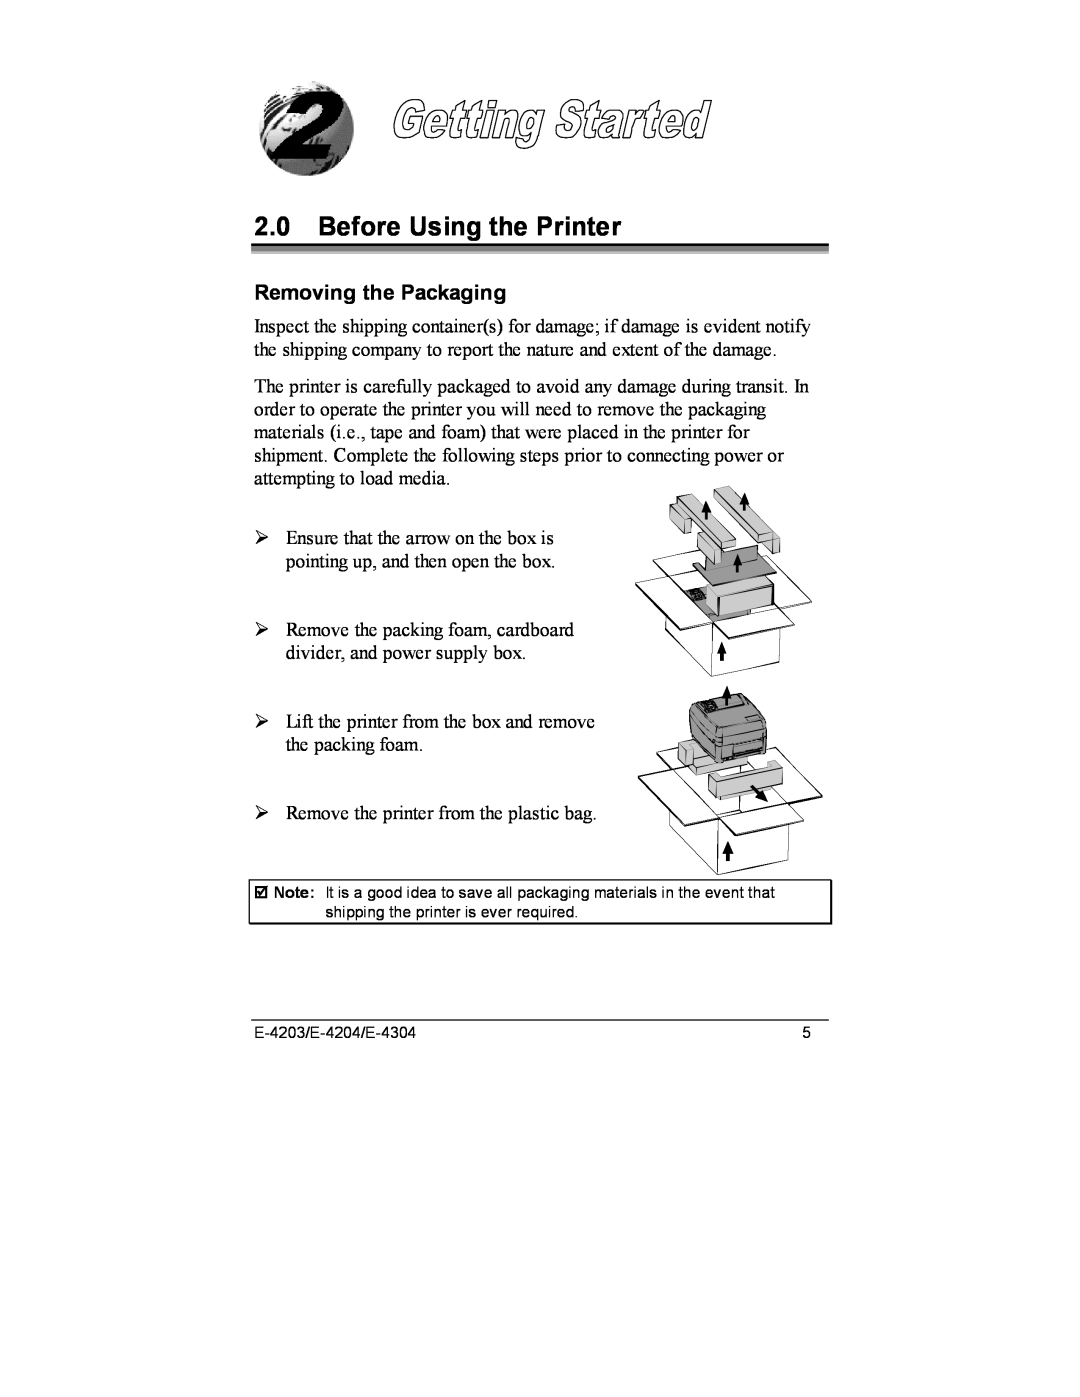 Datamax E-4203, E-4204, E-4304e manual Before Using the Printer, Removing the Packaging 